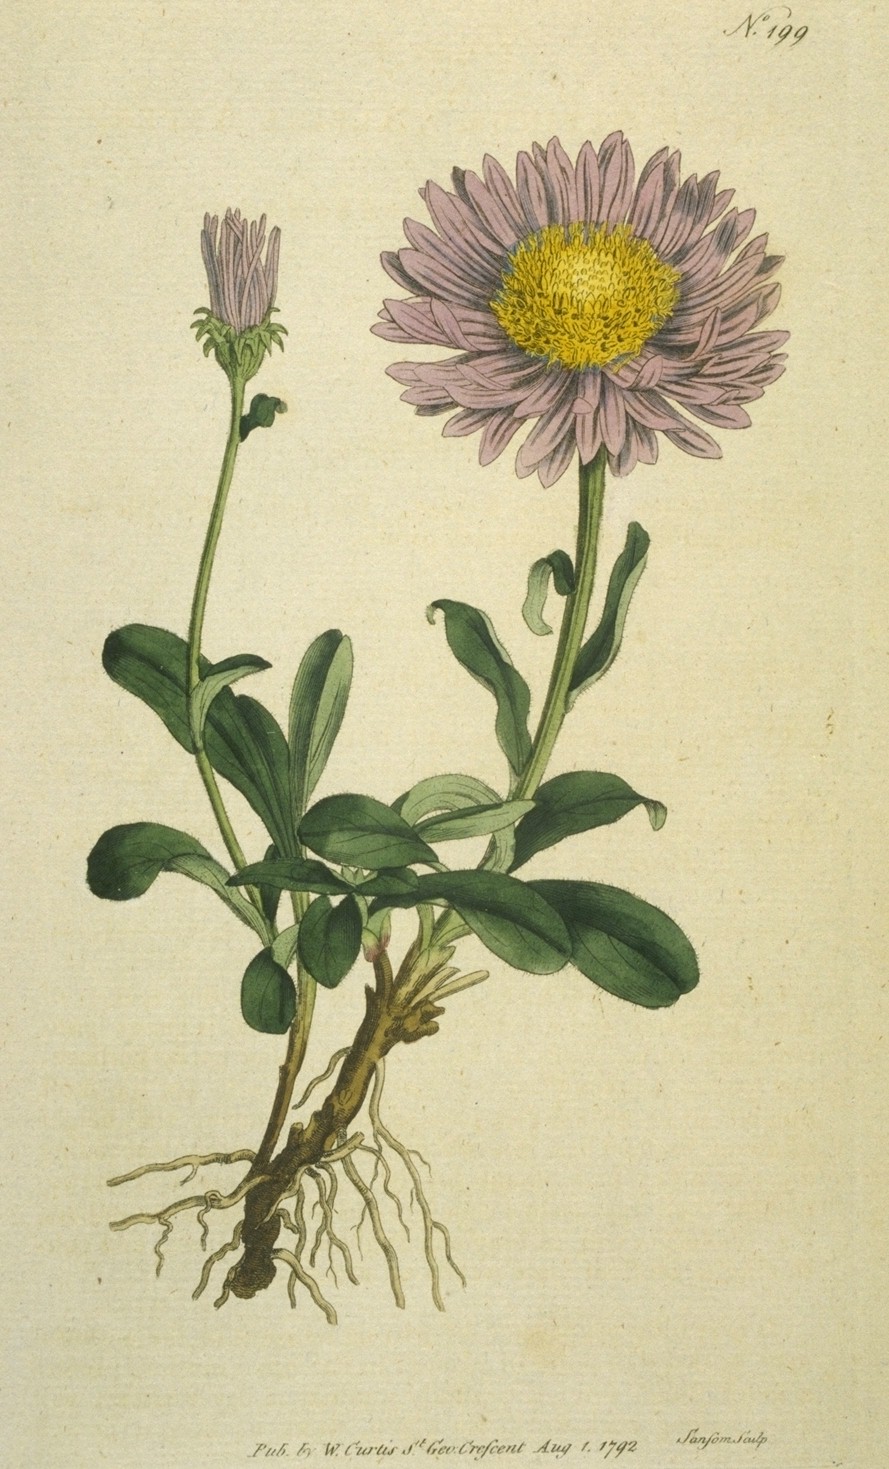 Antique Prints Blog: Botanical prints by William Curtis